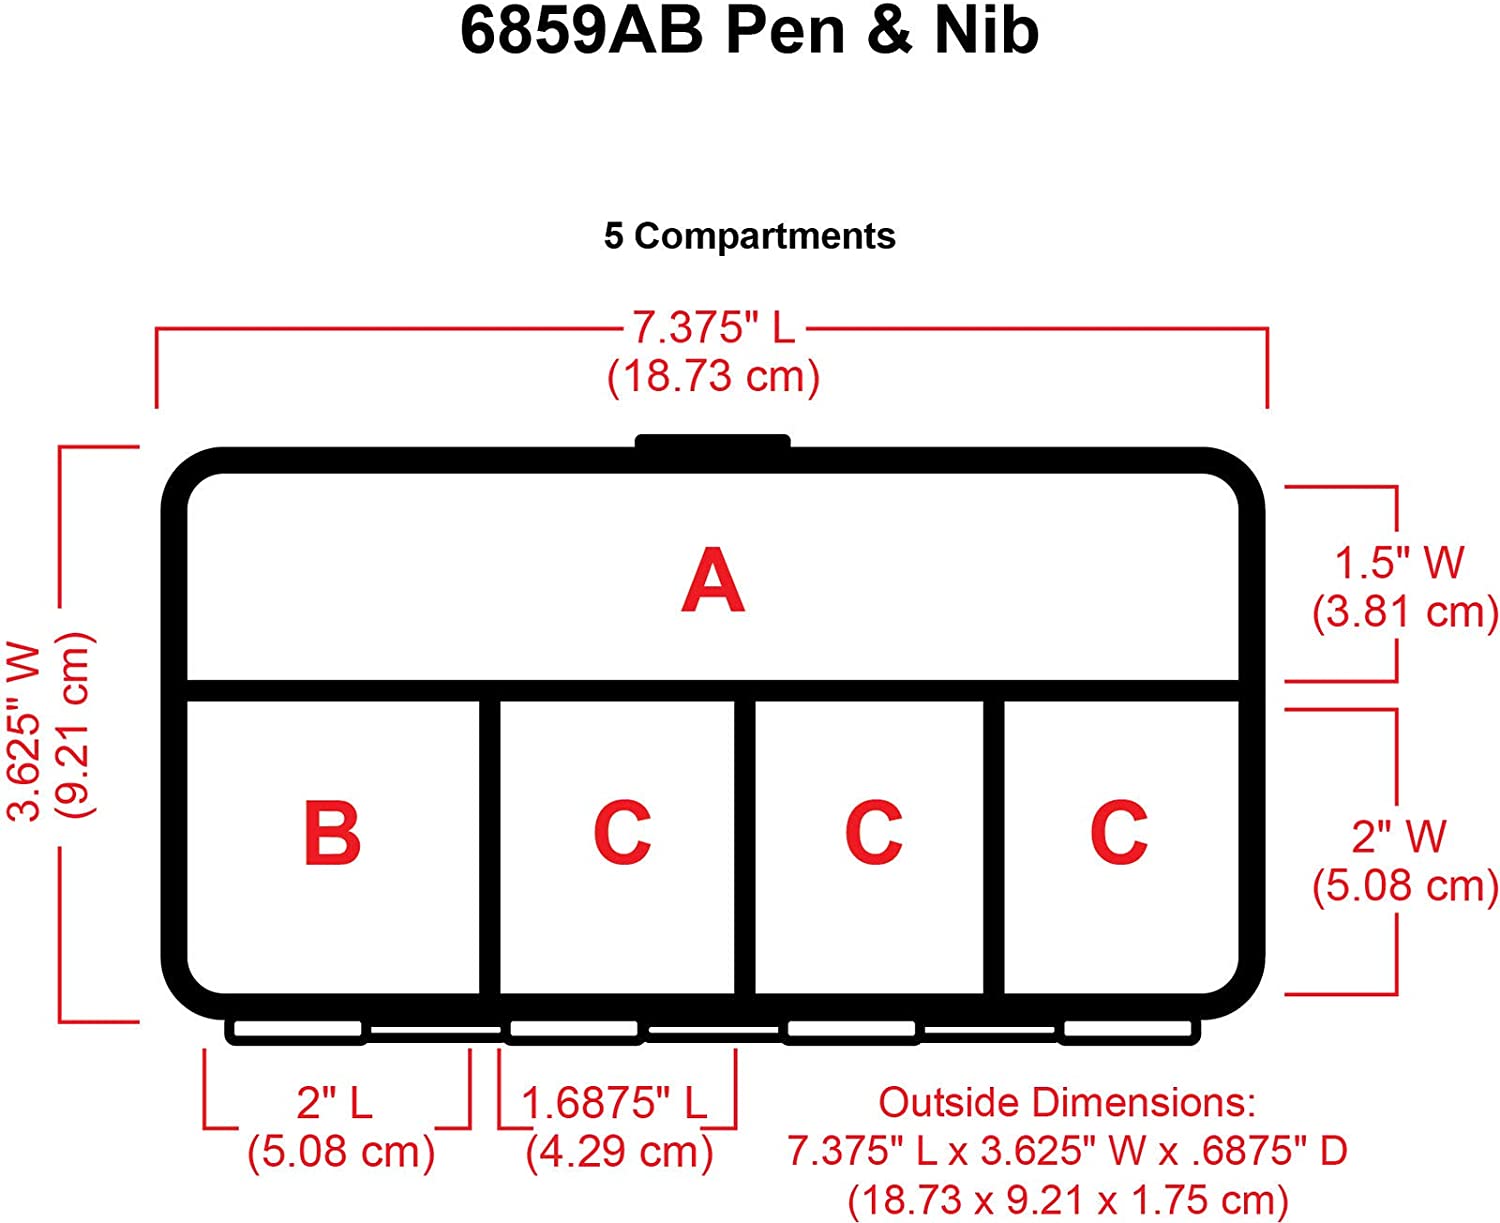 Pen & Nib ArtBin Case